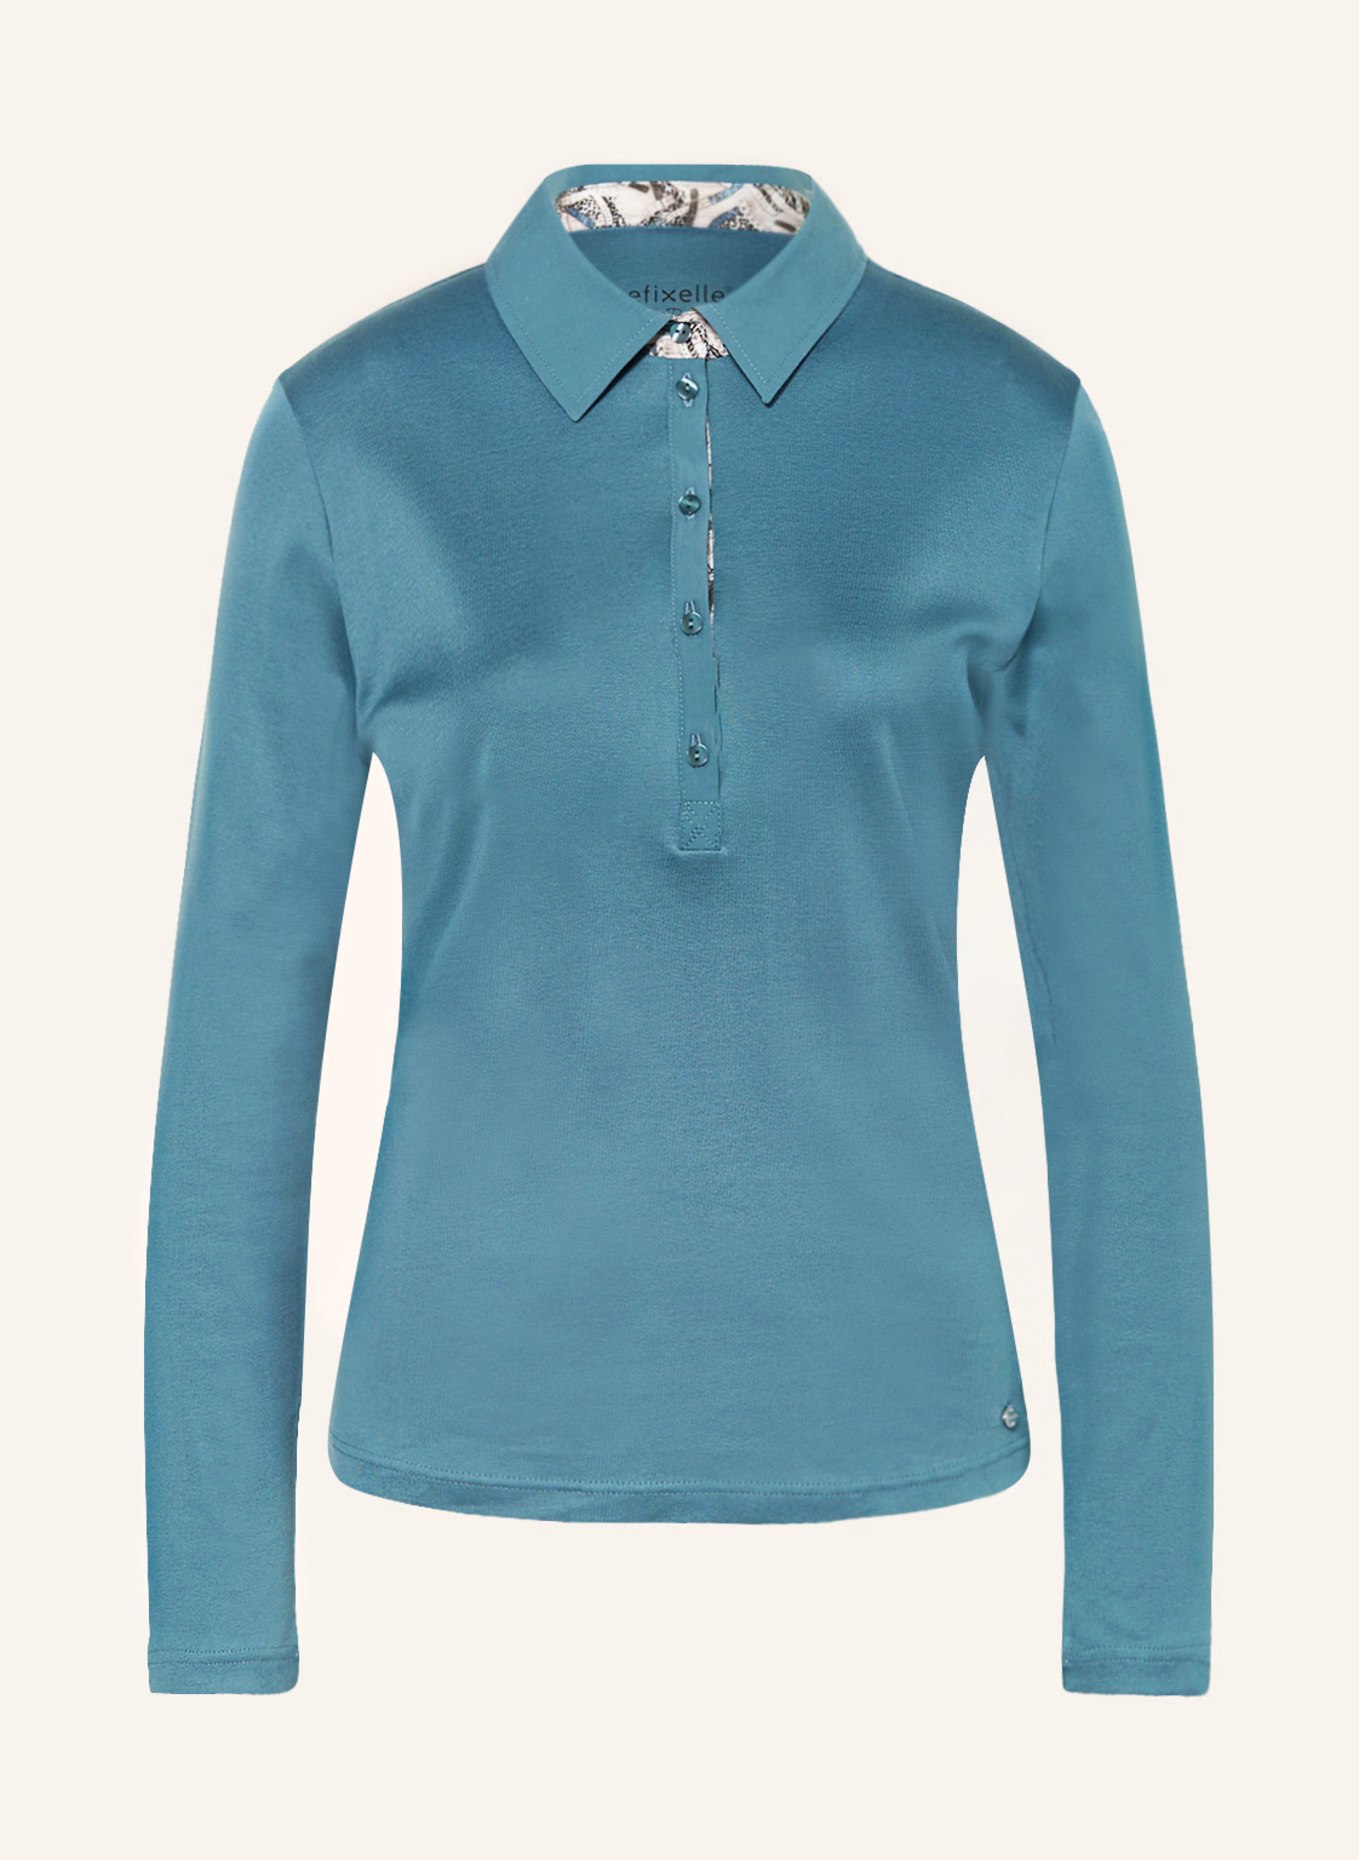 efixelle Jersey-Poloshirt, Farbe: PETROL (Bild 1)